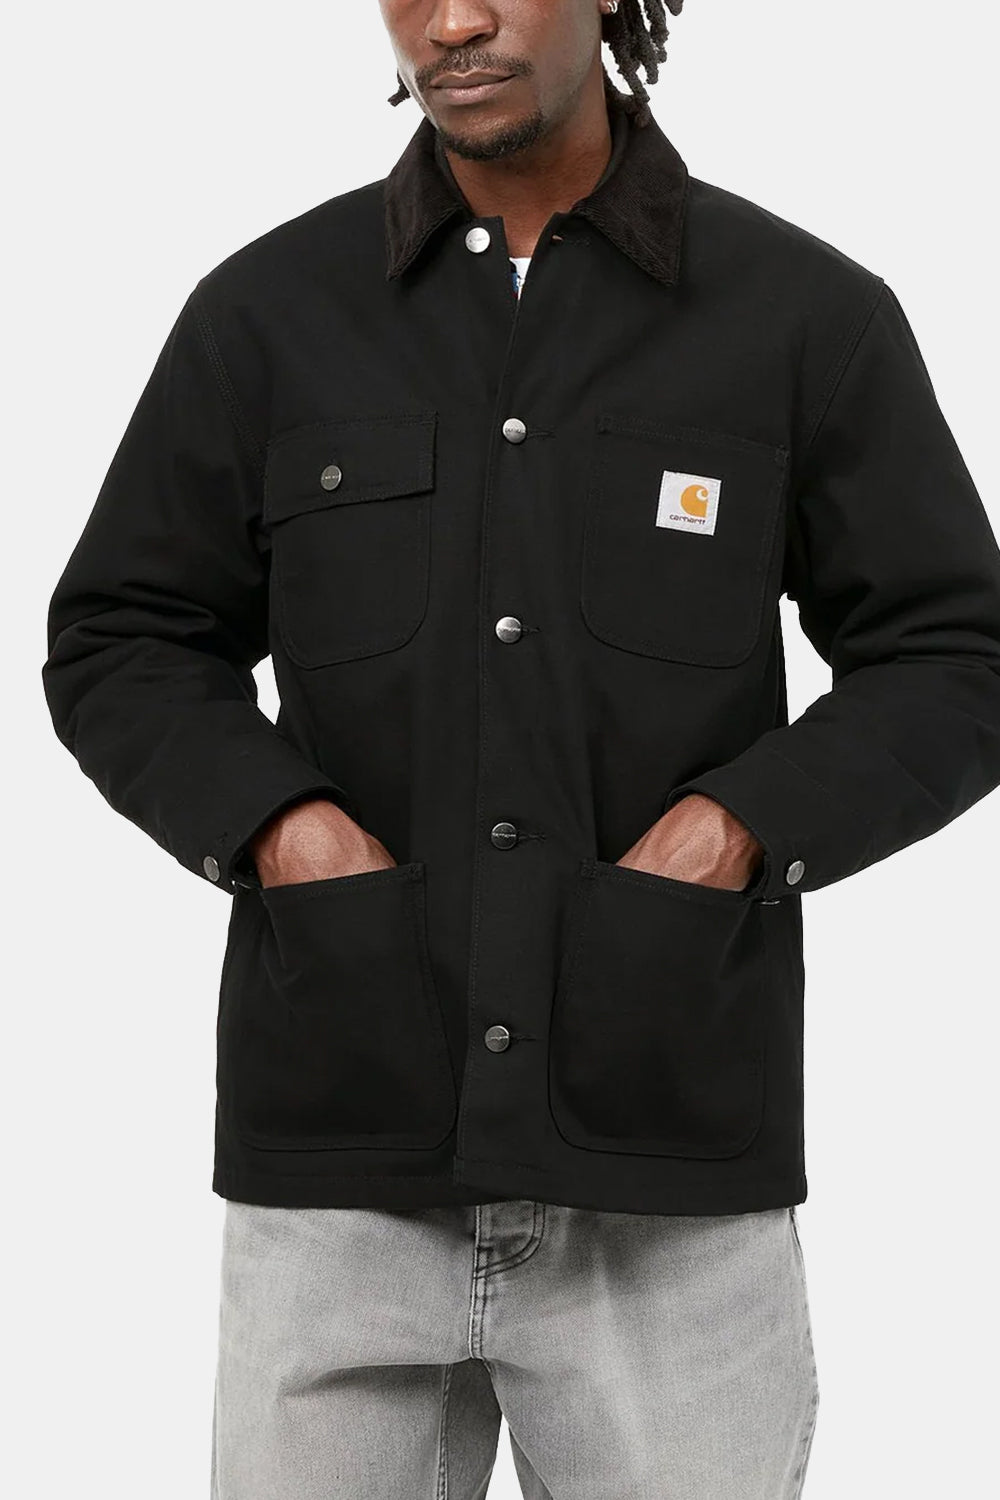 Carhartt Michigan Chore Jacket (Black/Black Rigid)